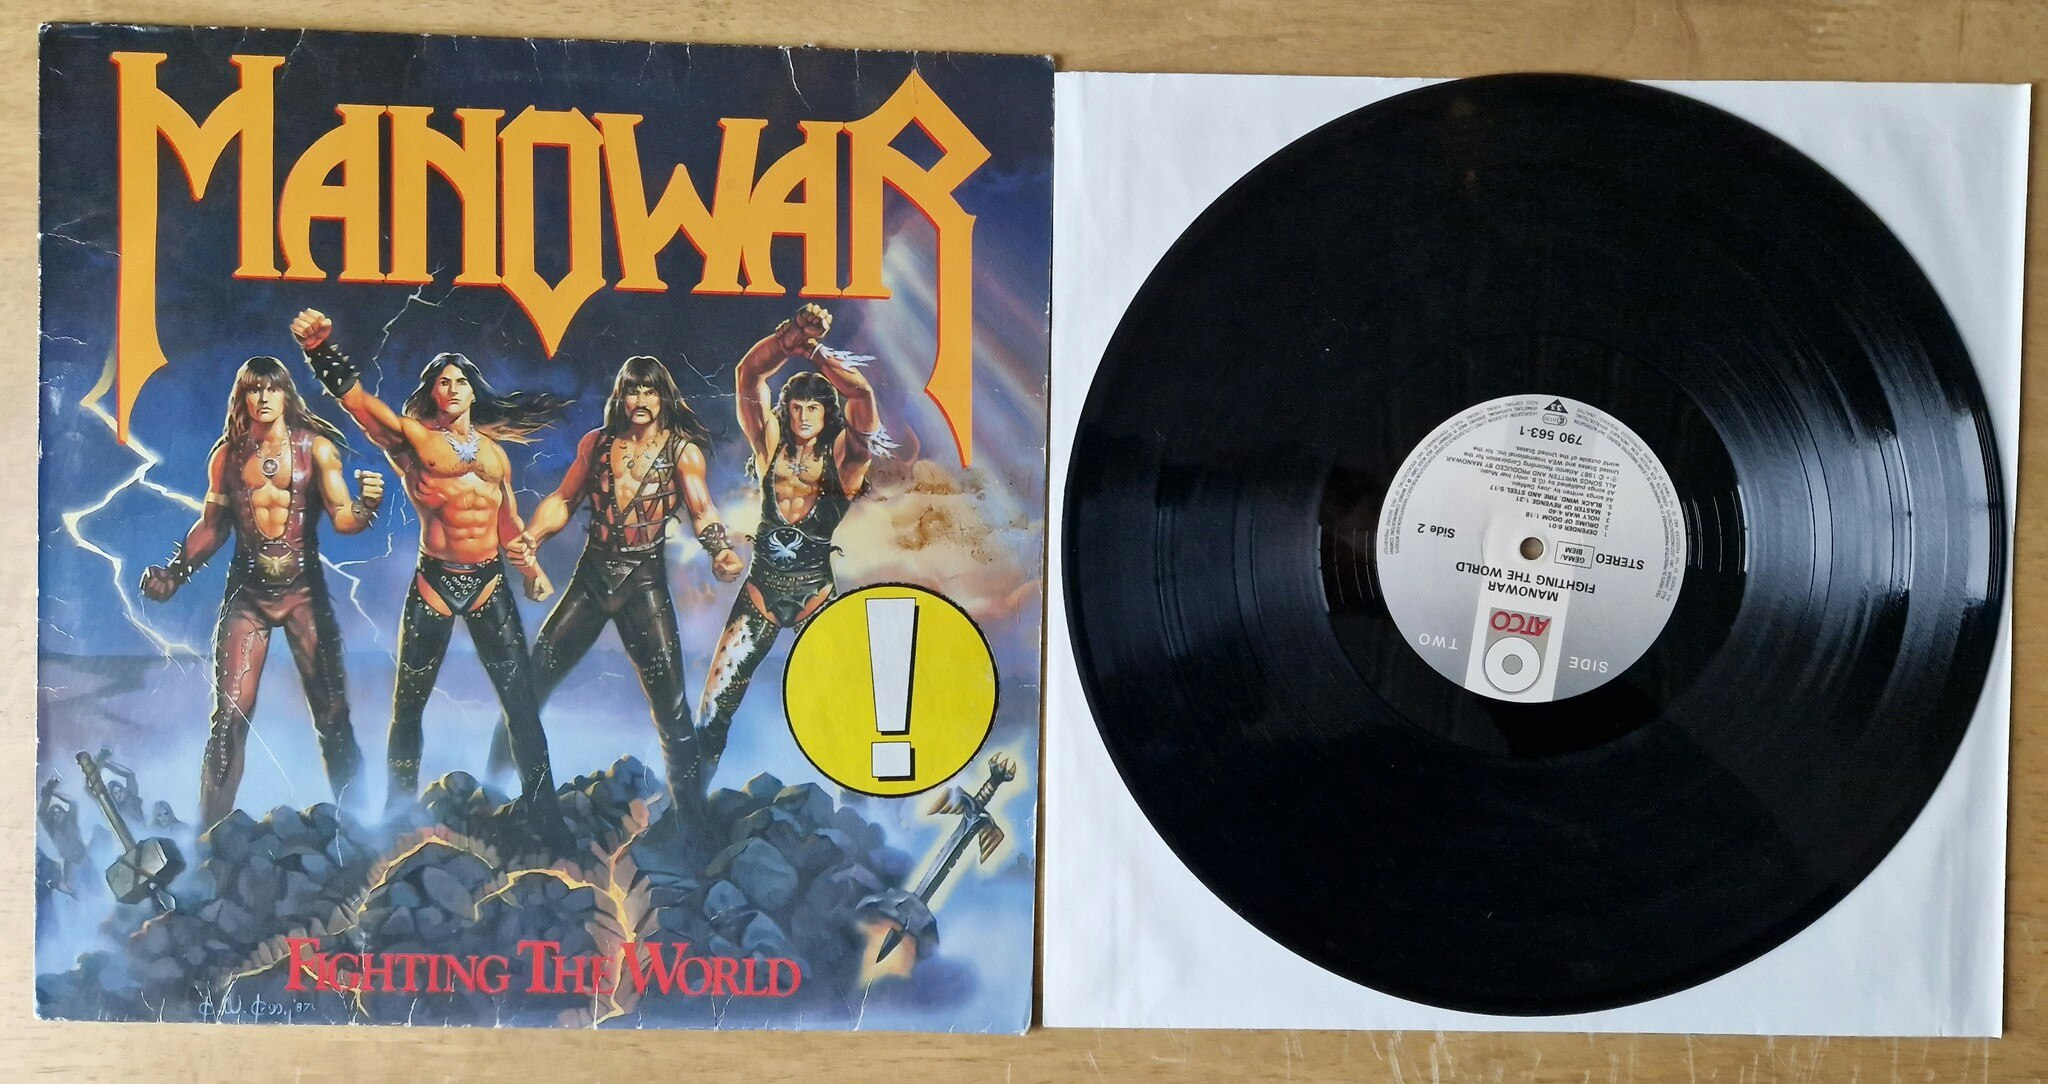 Manowar, Fighting the world. Vinyl LP